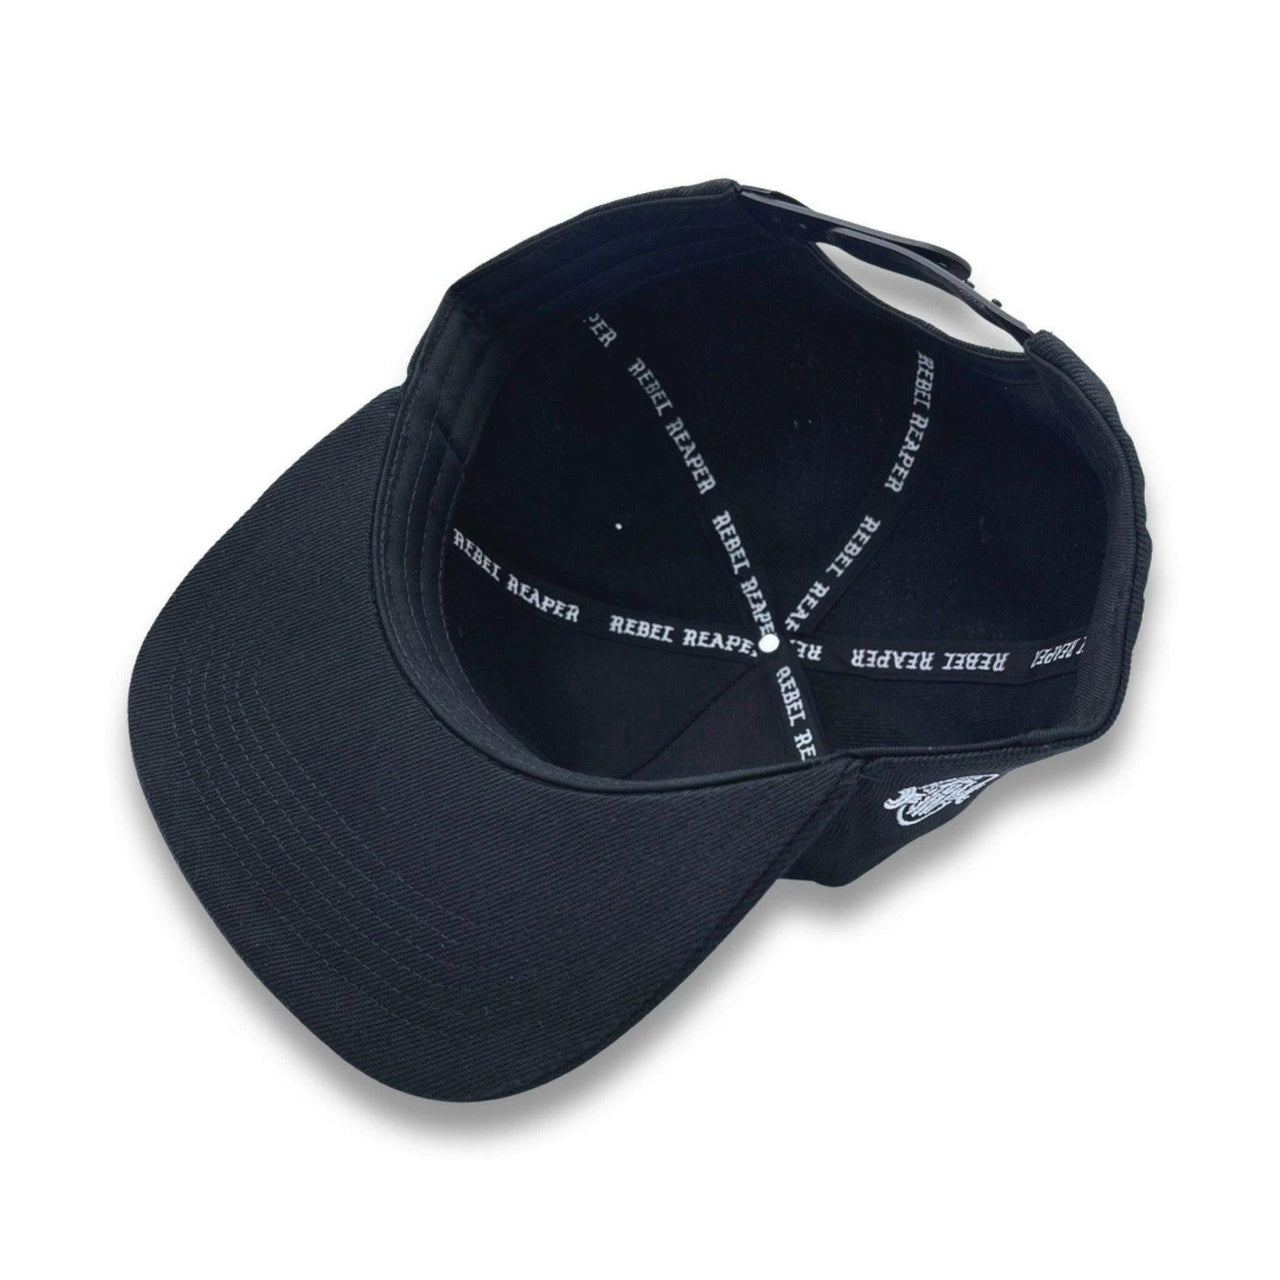 White Monogram Embroidered Snapback - Rebel Reaper Clothing Company Hats - Snapback